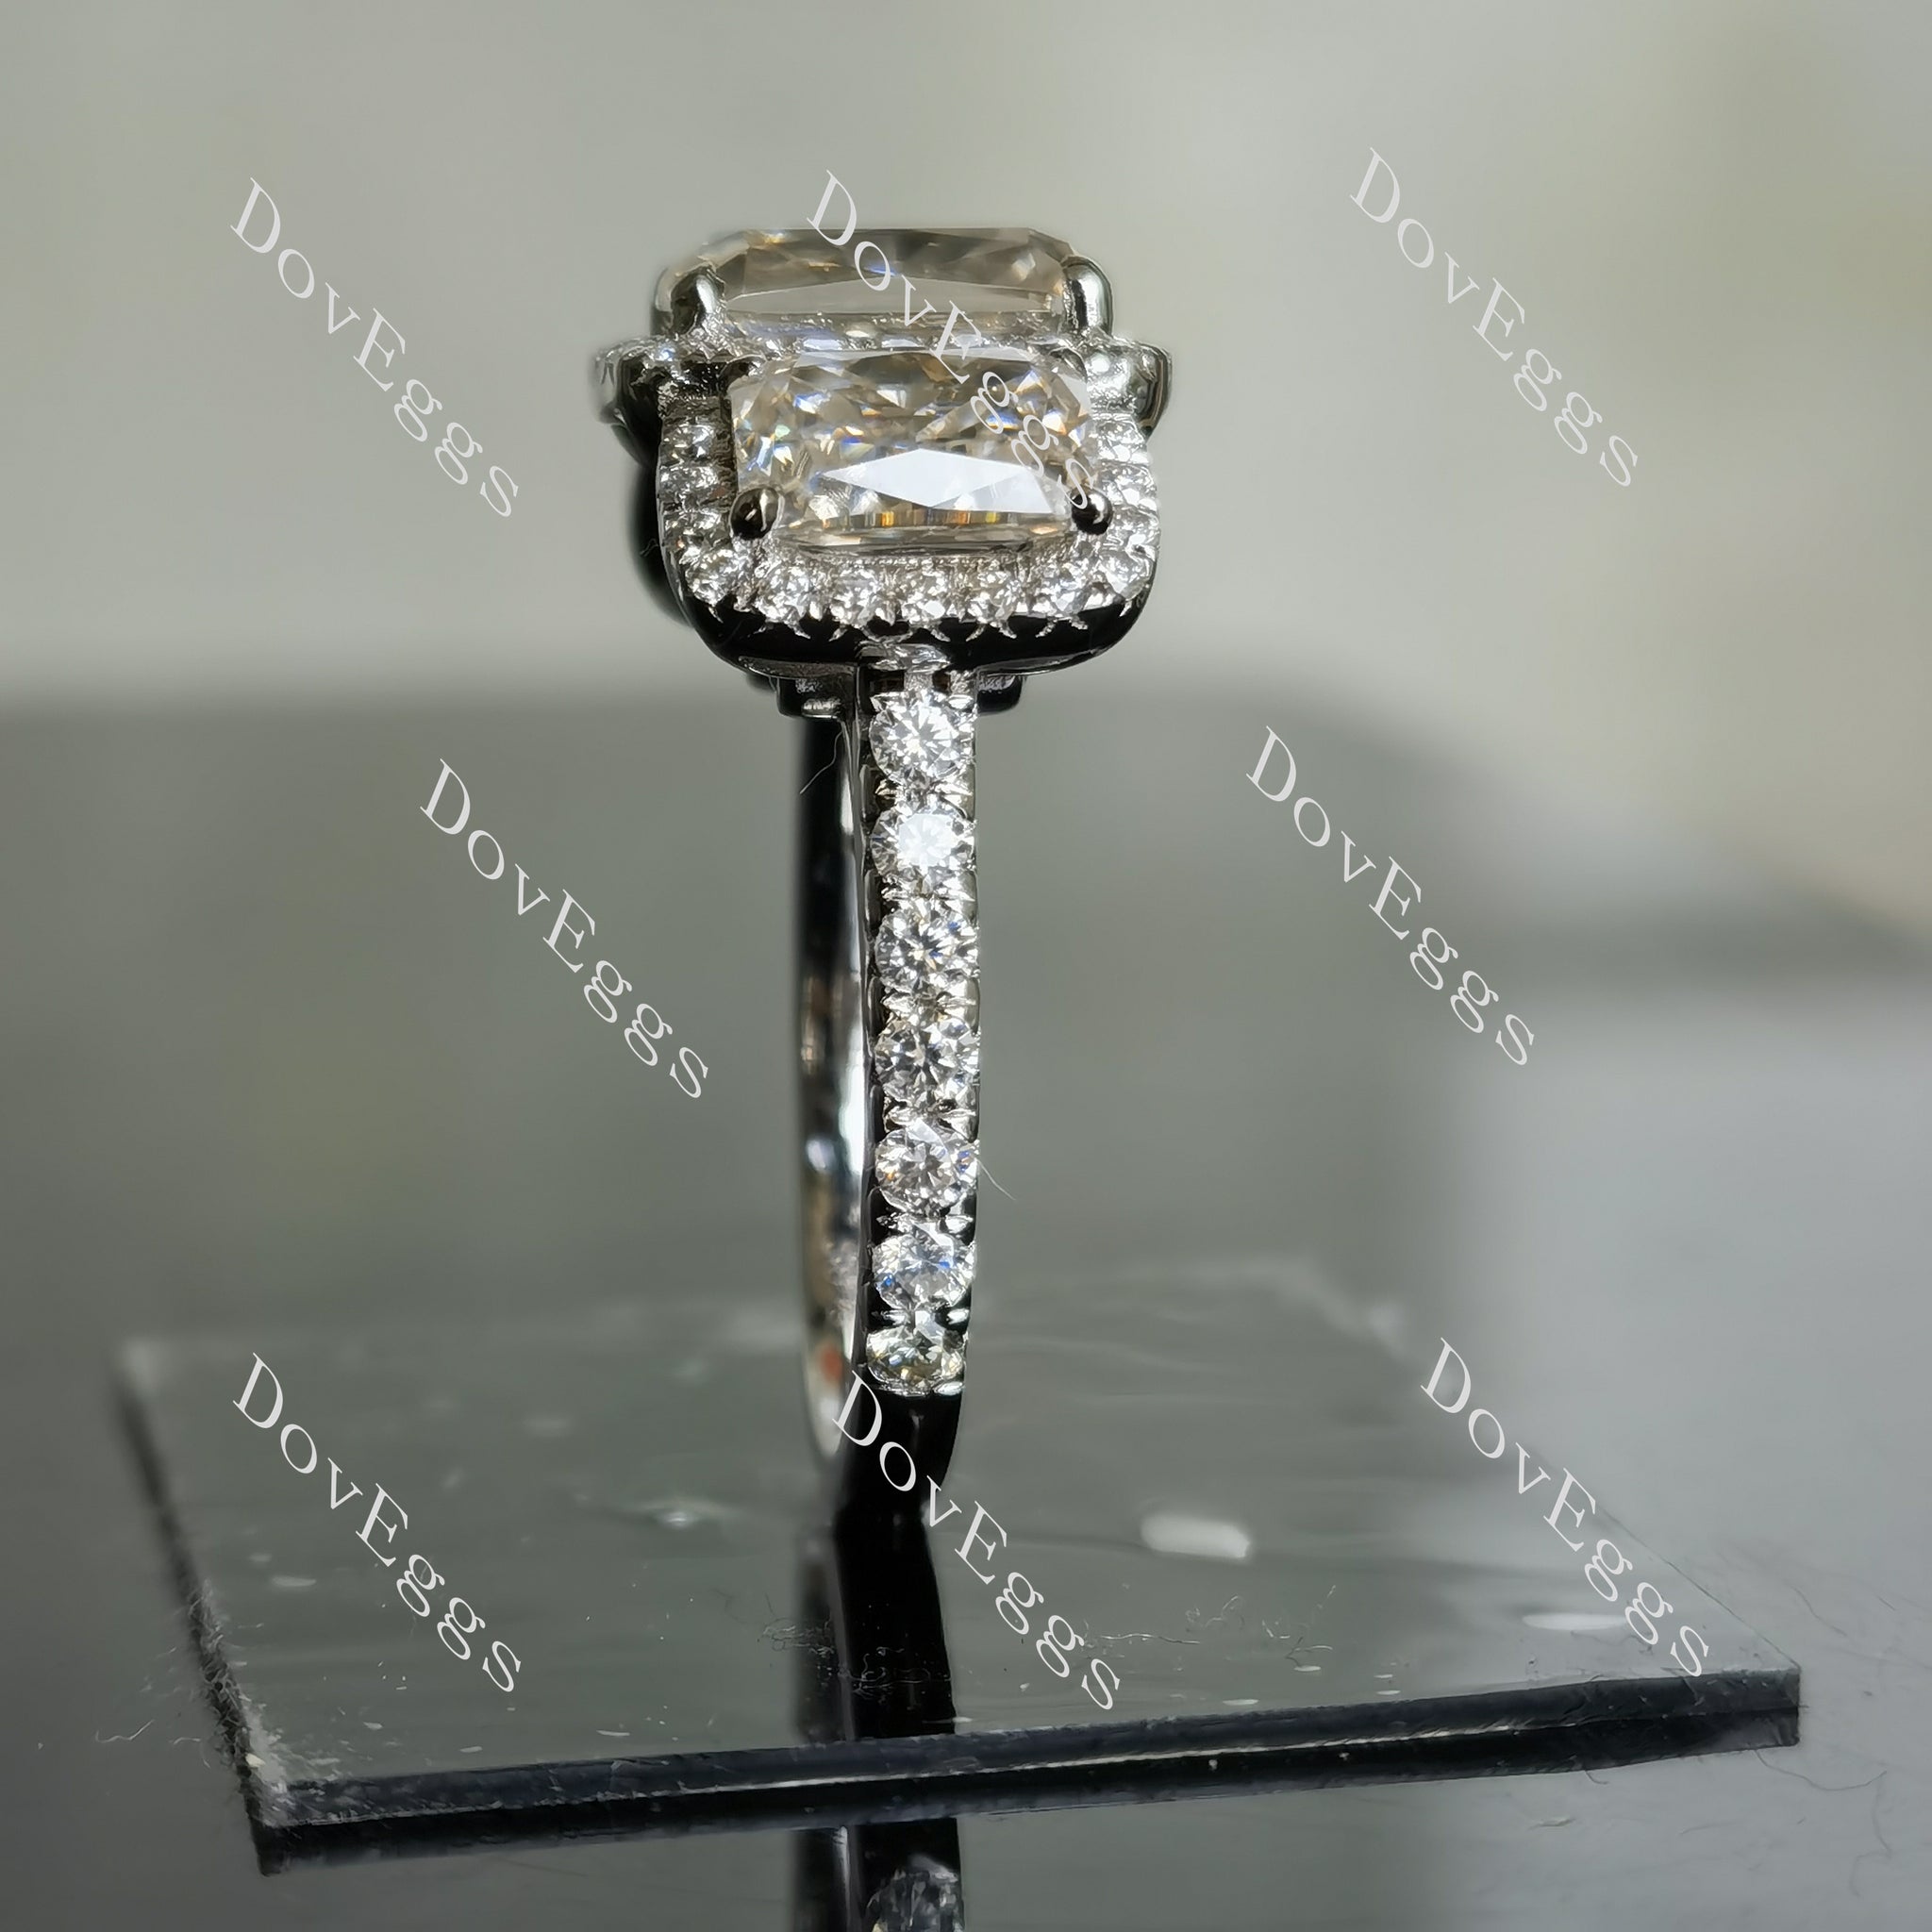 Doveggs radiant three-stone halo pave moissanite engagement ring